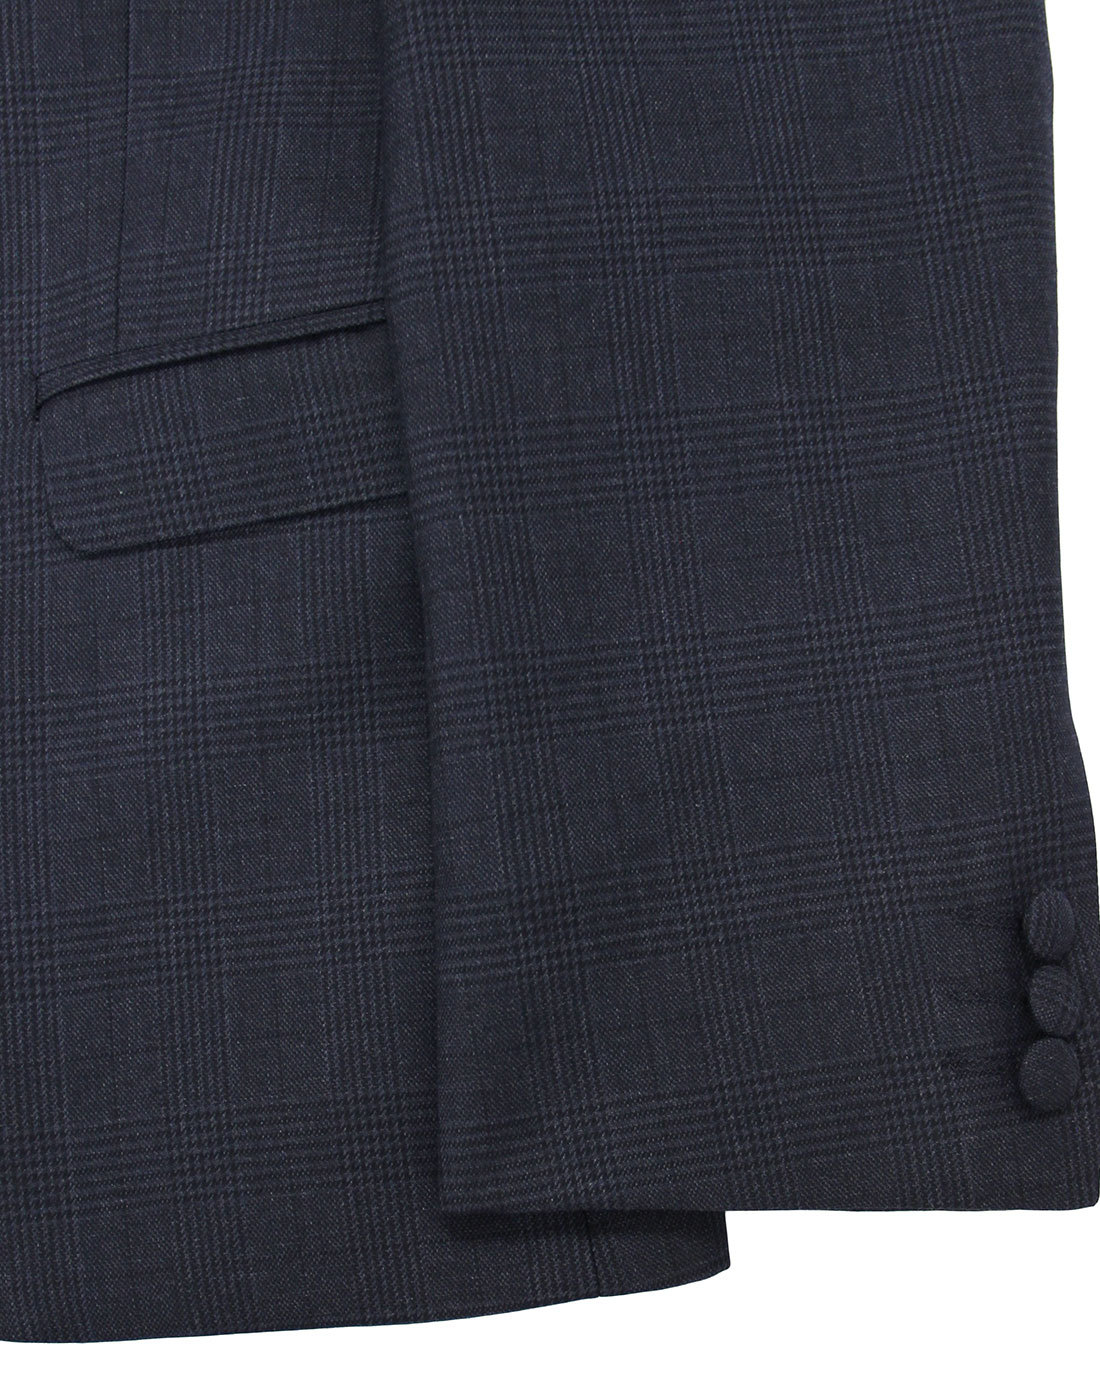 Madcap England Retro Mod 3 Piece Suit in Dark Blue Check